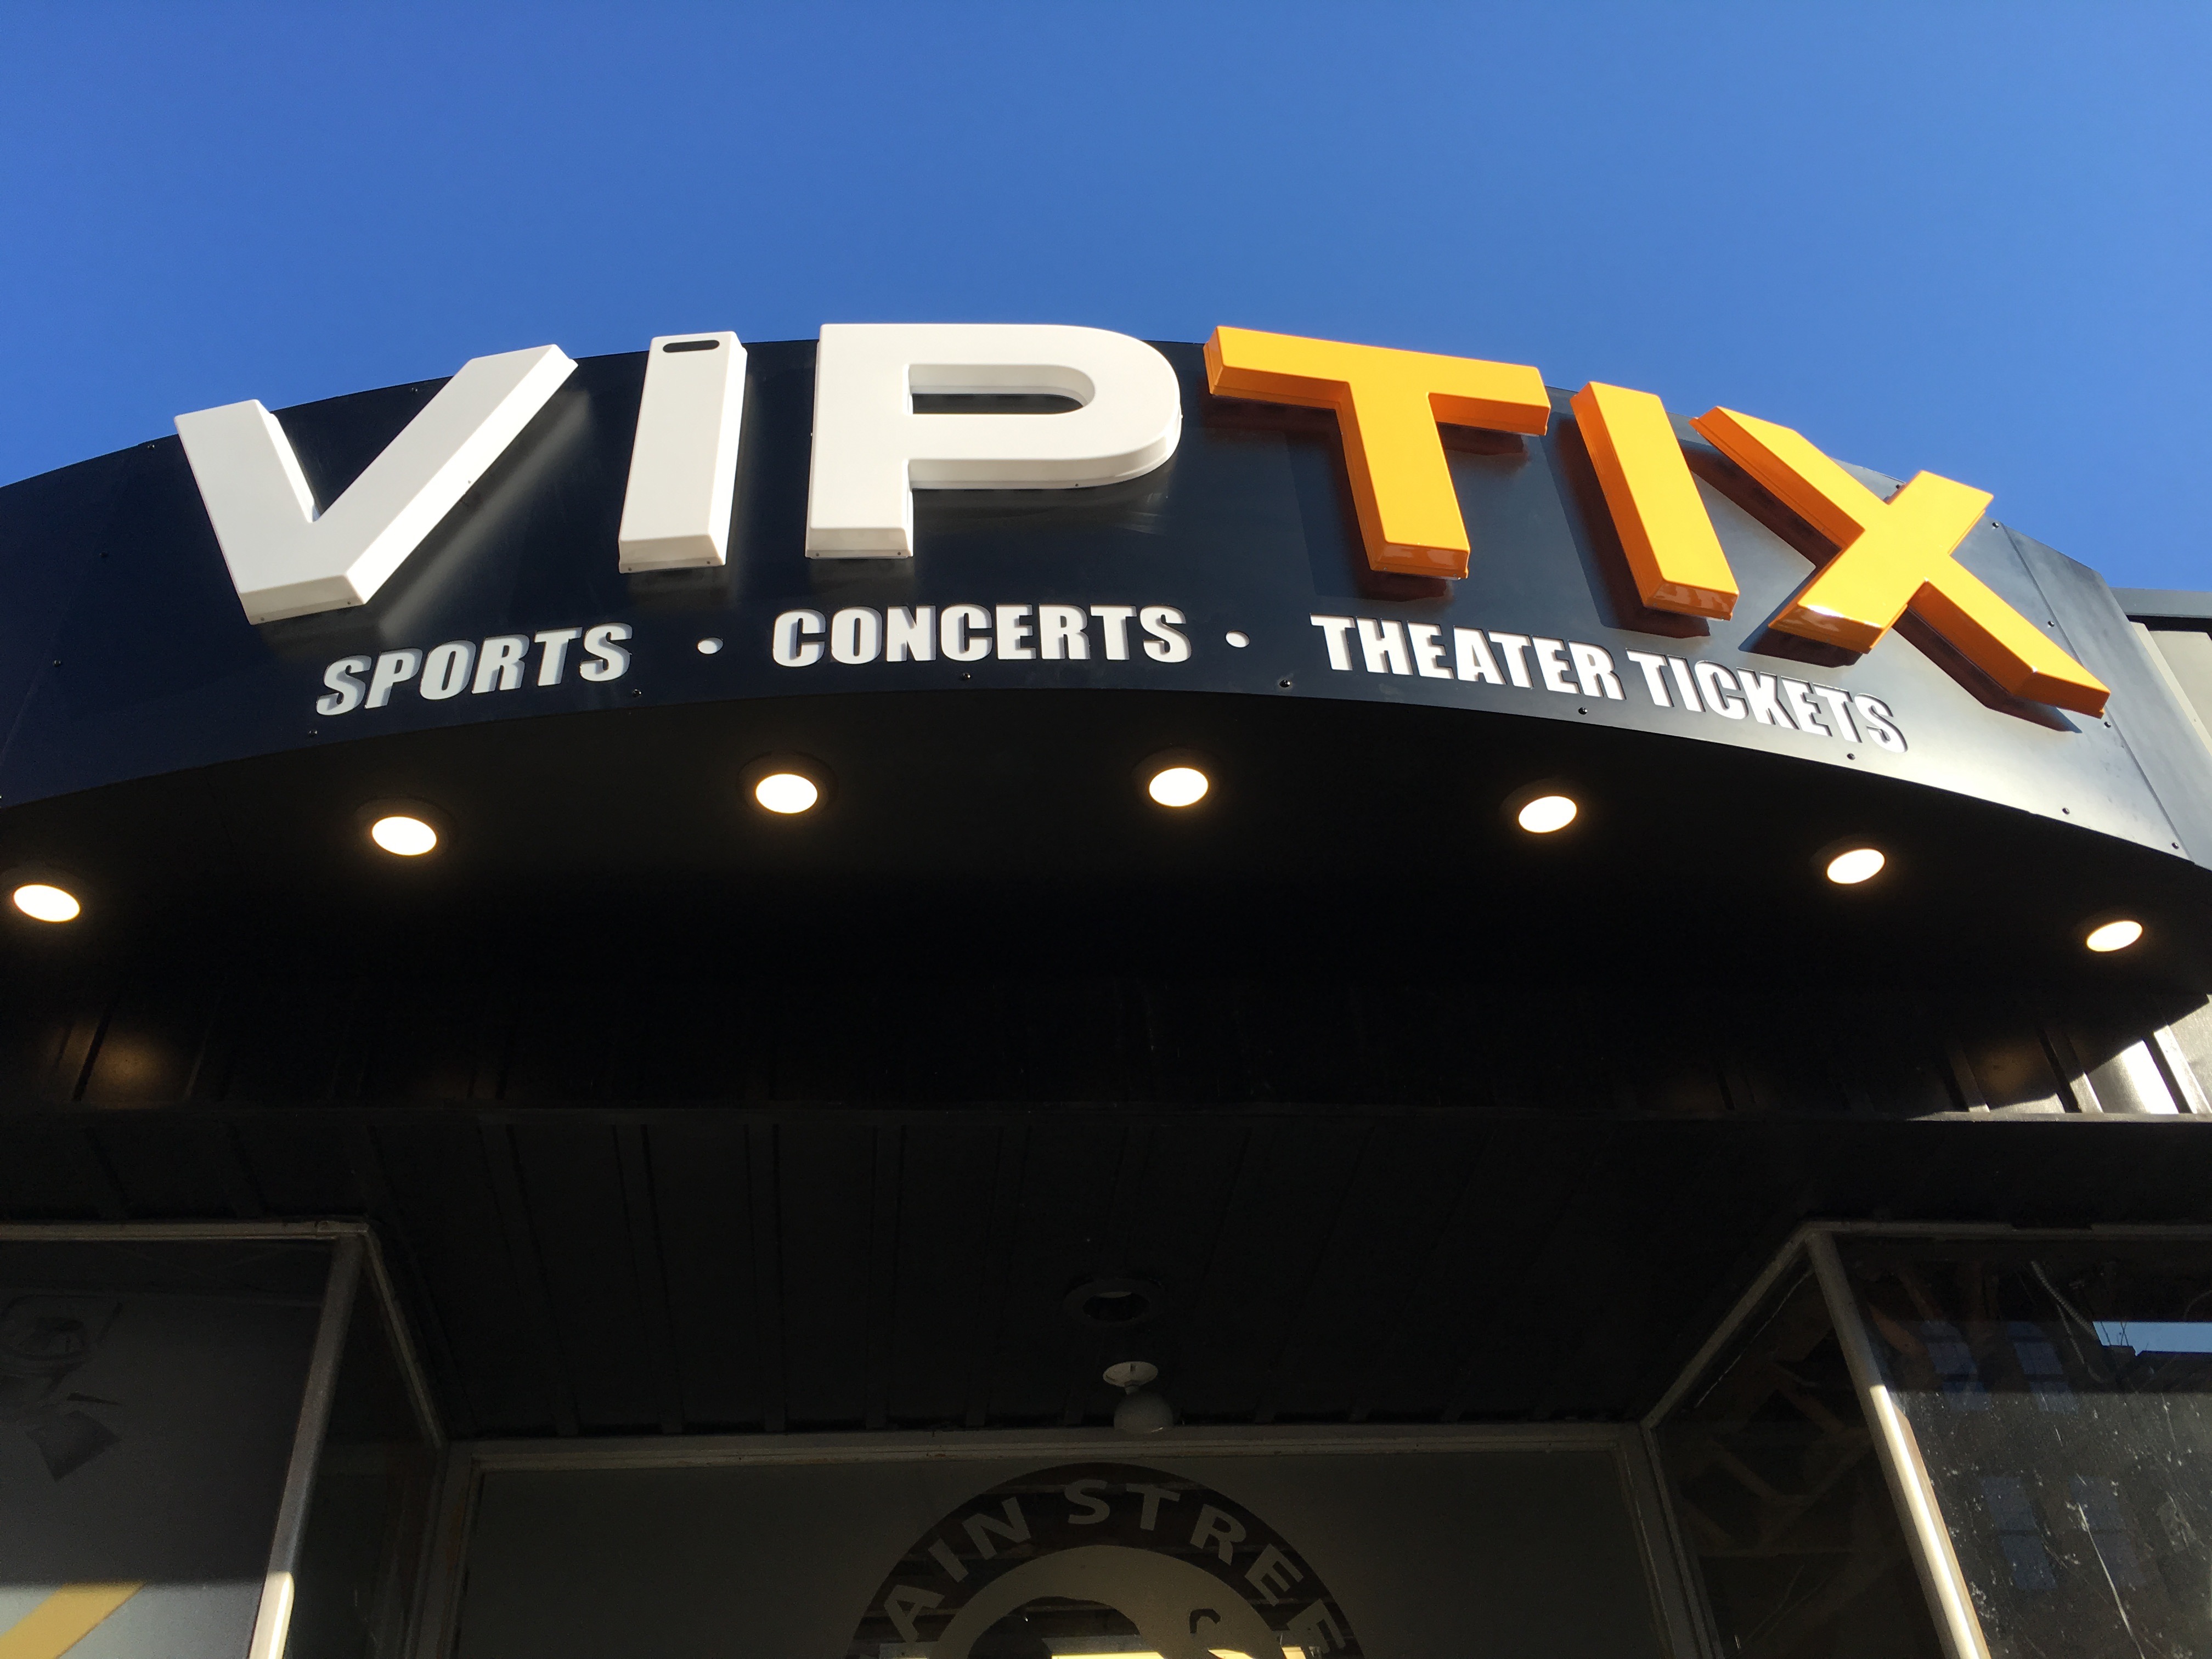 VIPTIX HQ- Buffalo, NY